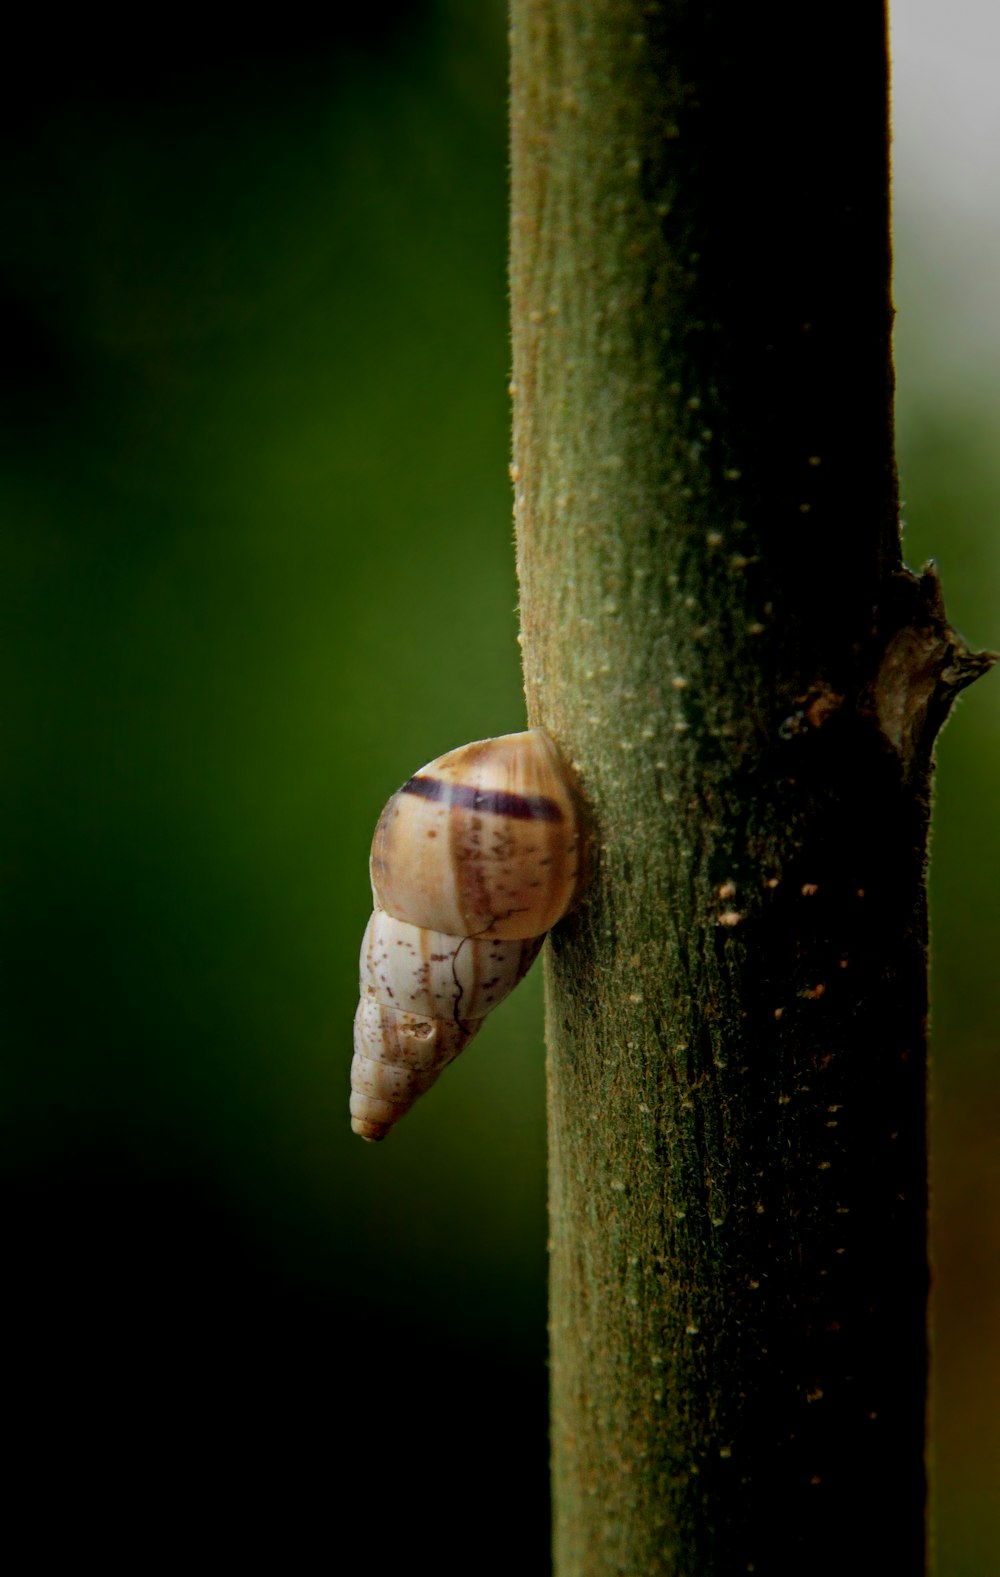 a close up of a snail on a tree